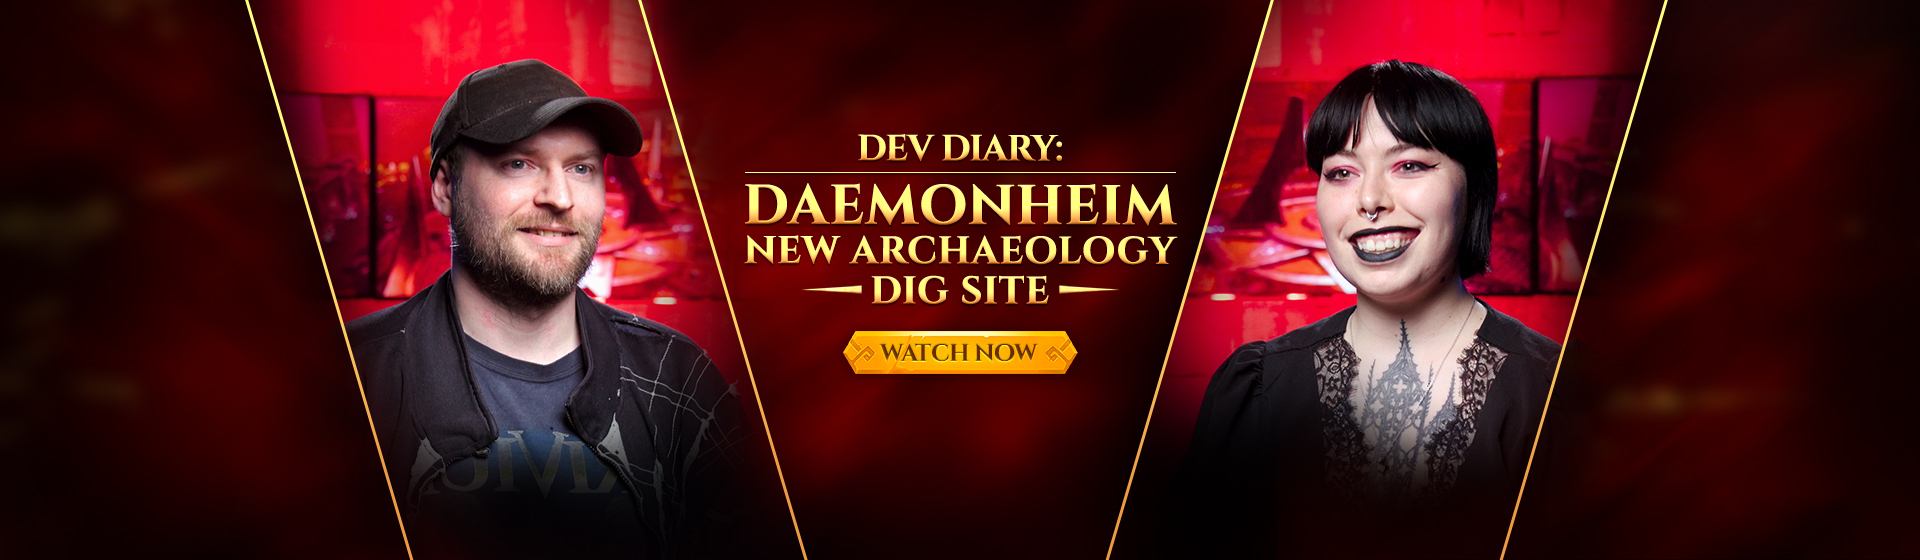 Daemonheim Dev Diary